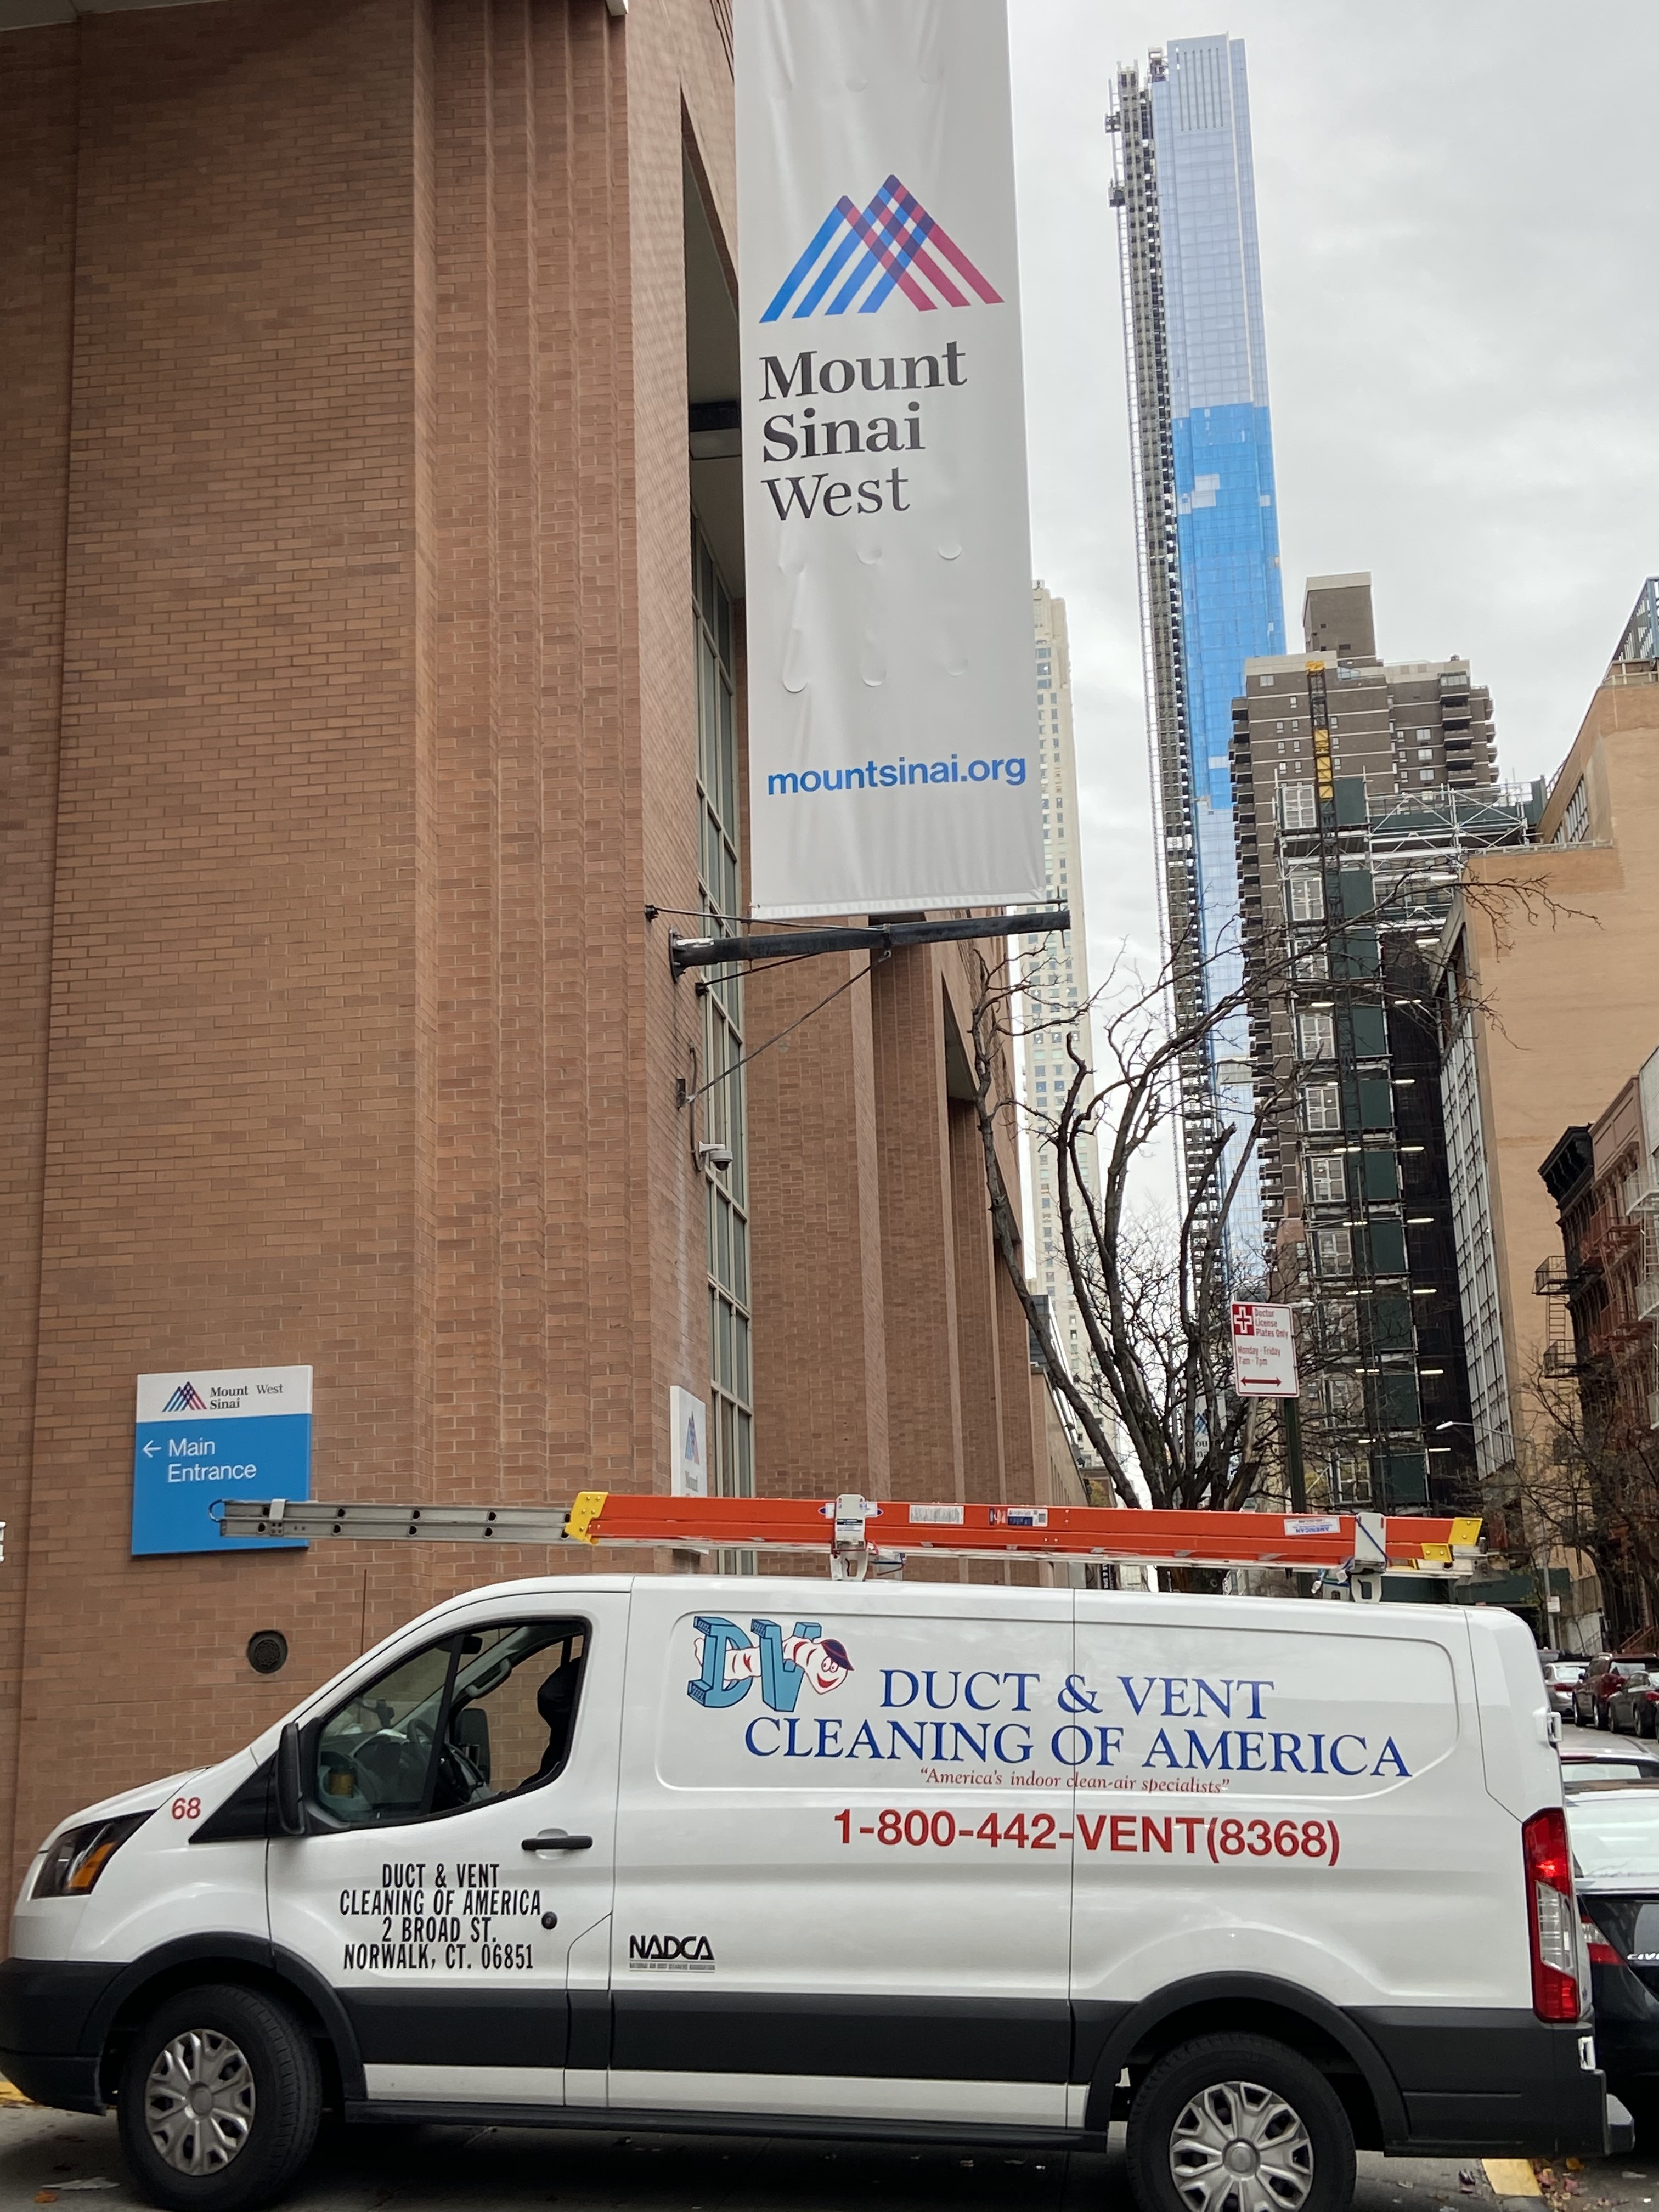 Mount Sinai Hospital West – New York City IMG_3381.jpg